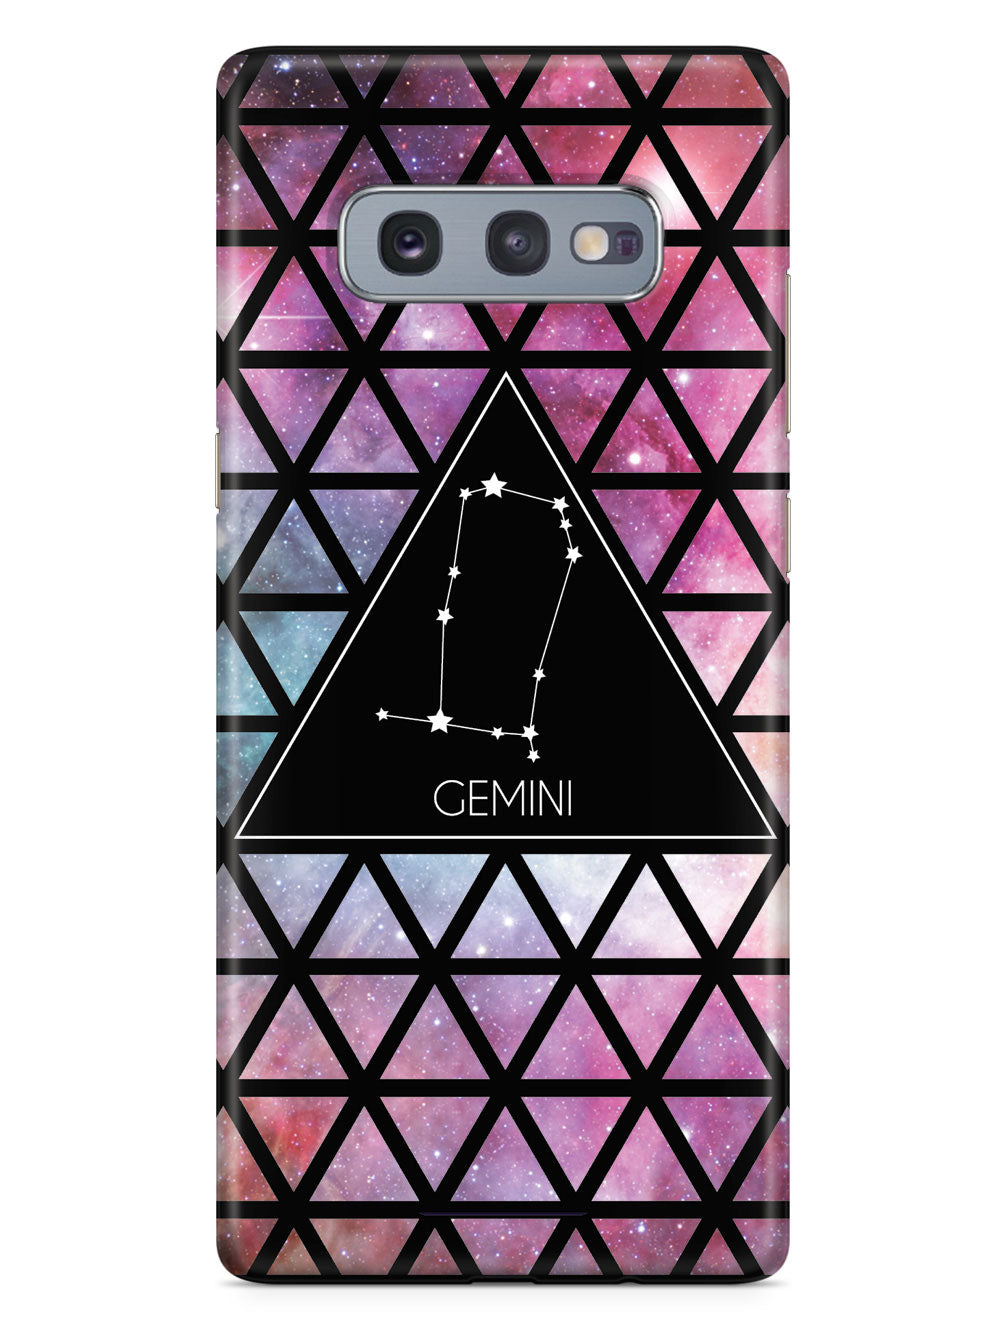 Zodiac Constellation - Gemini Case